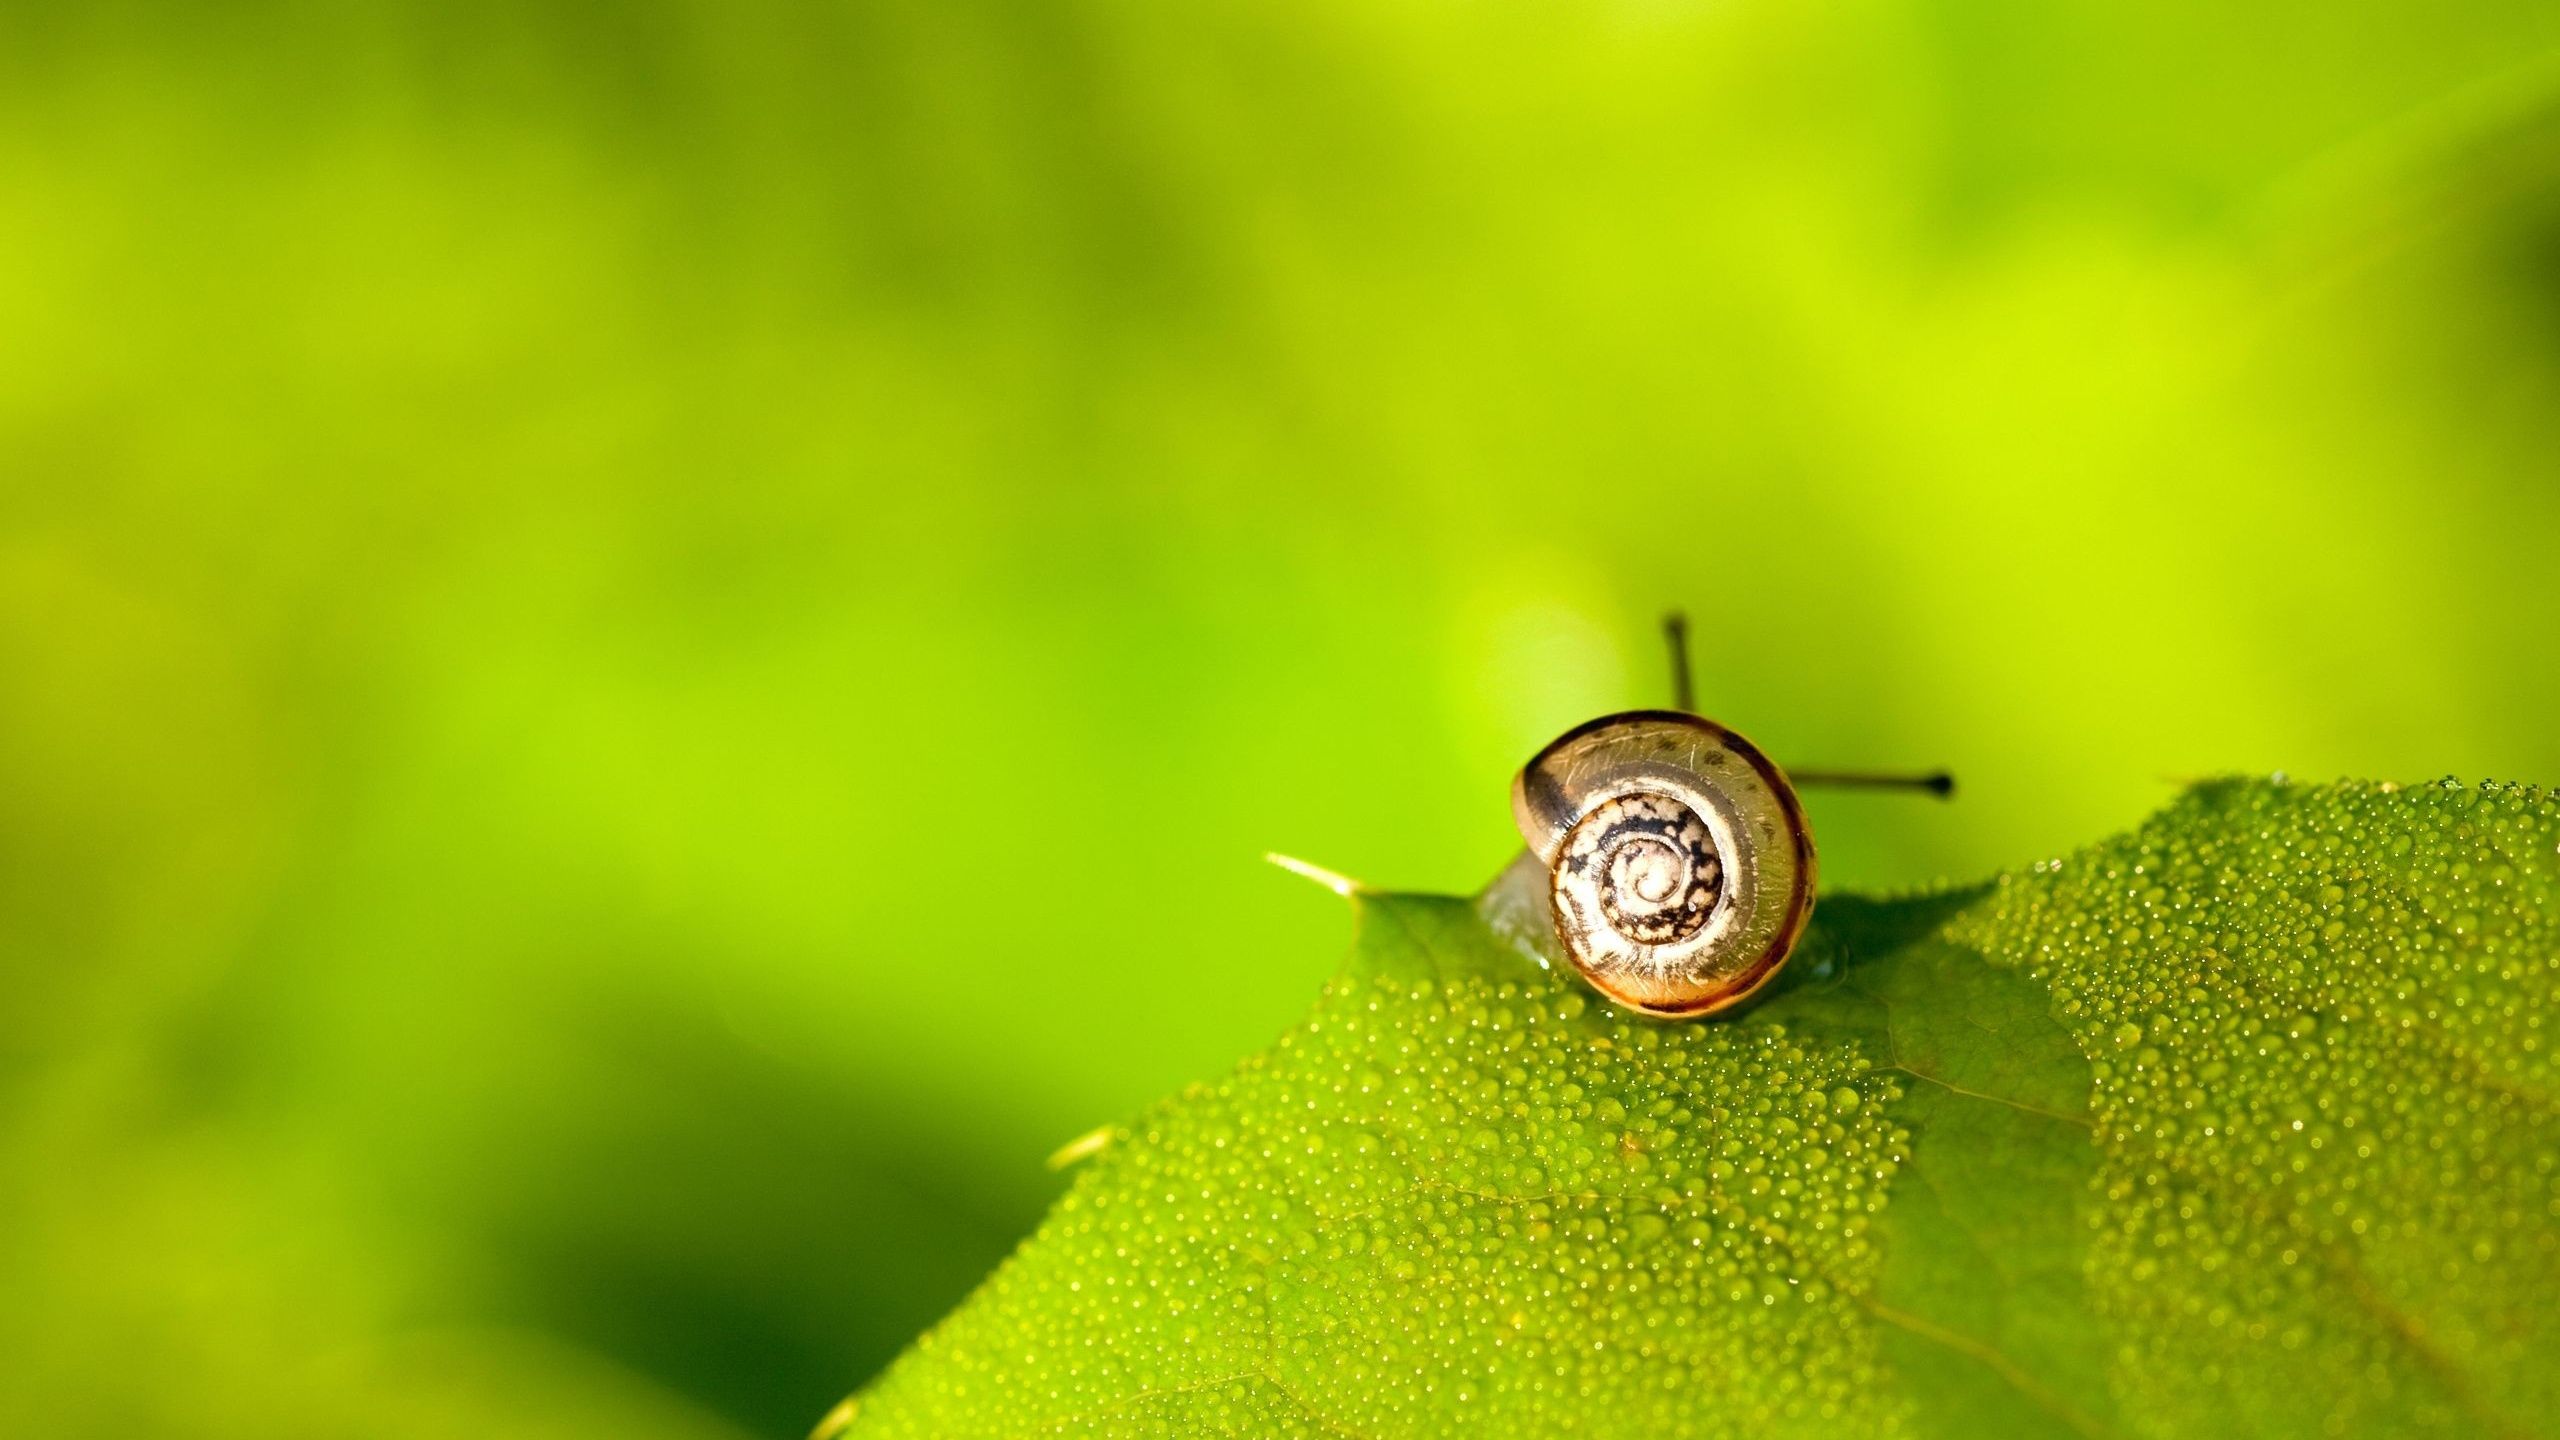 Cute Snail Picture